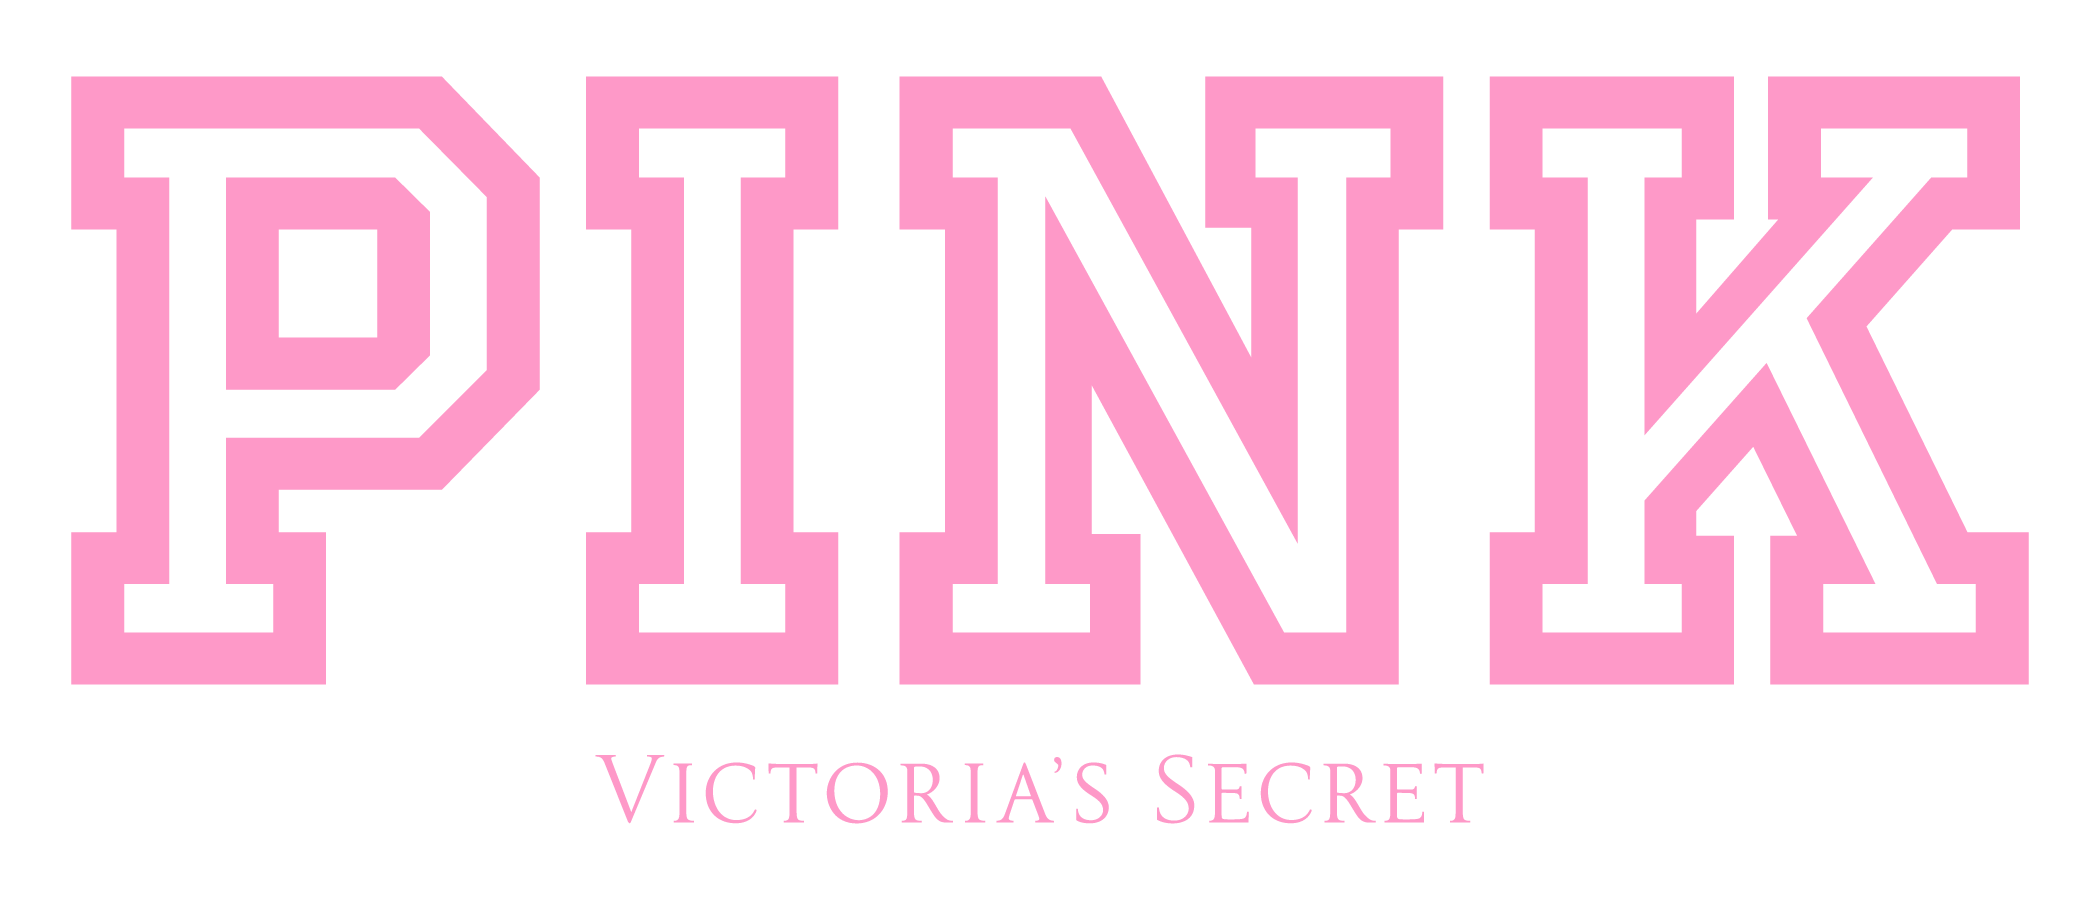 secret clipart logo